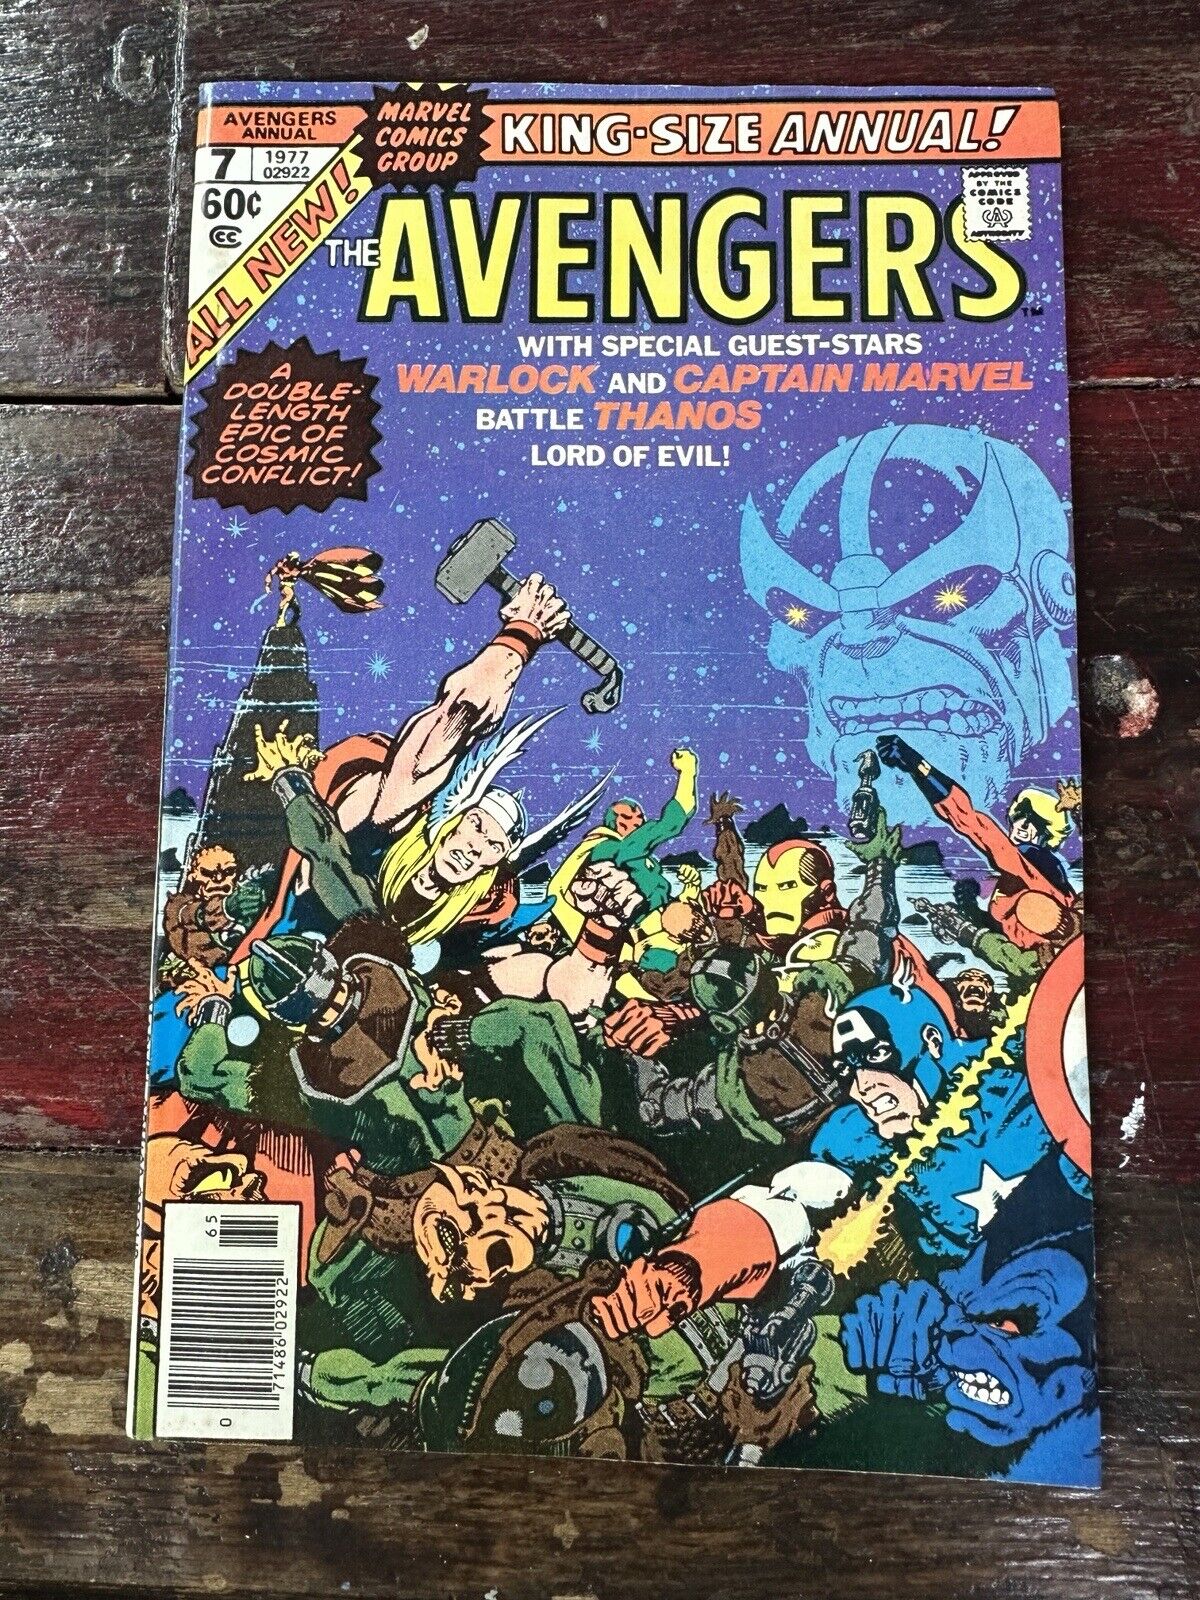 Avengers Annual #7 (1977) - Death of Thanos